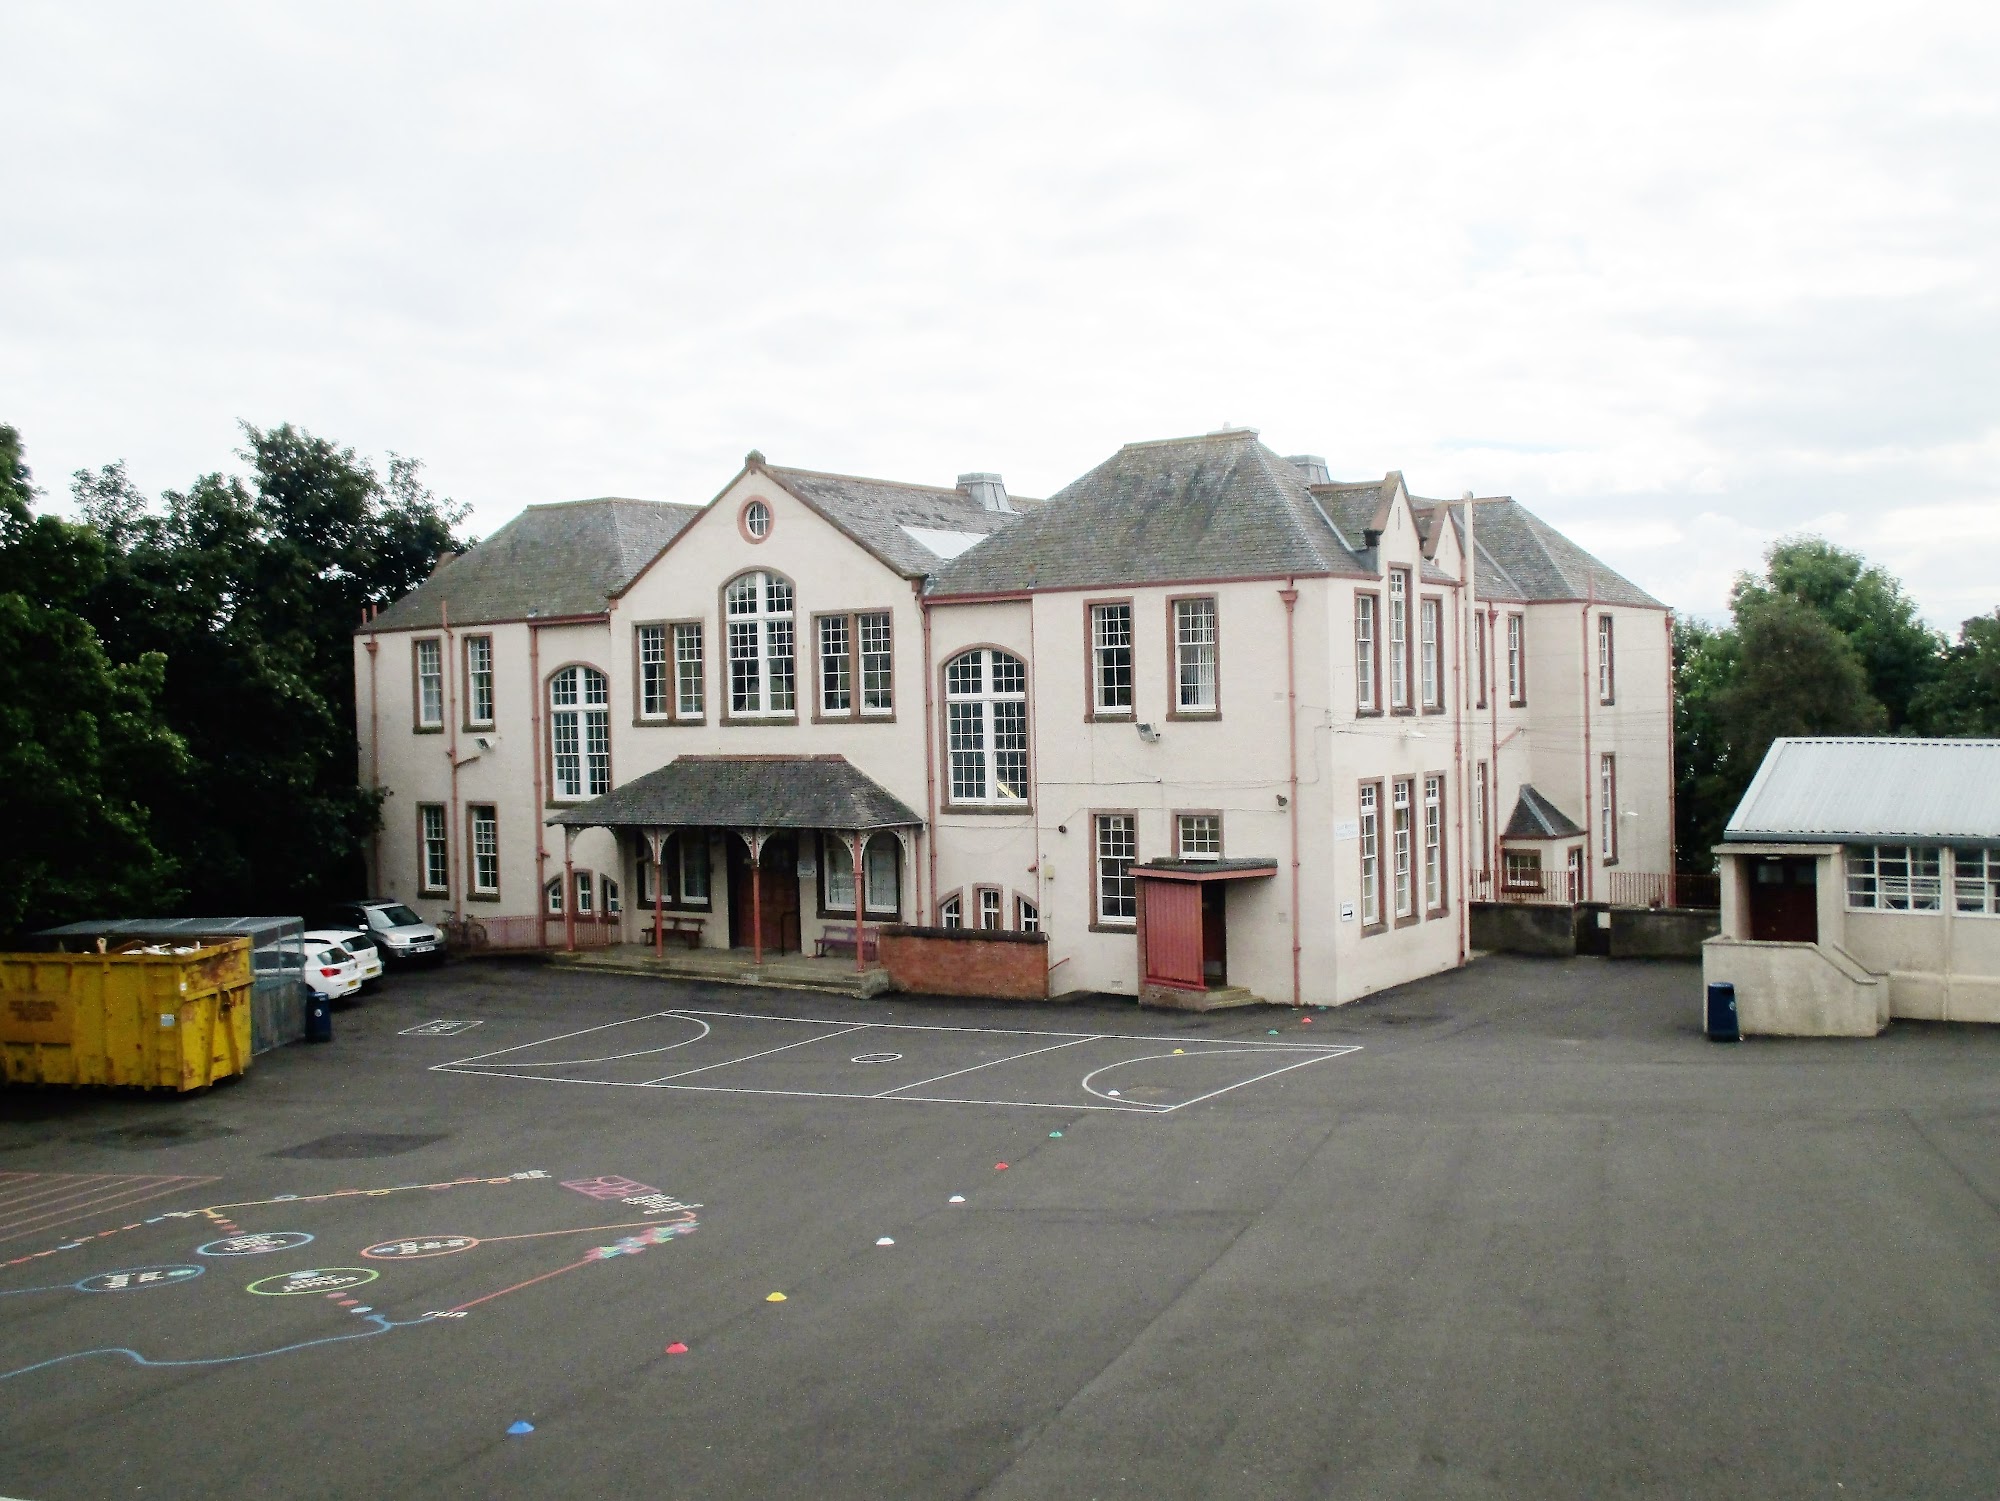 East Wemyss Primary School